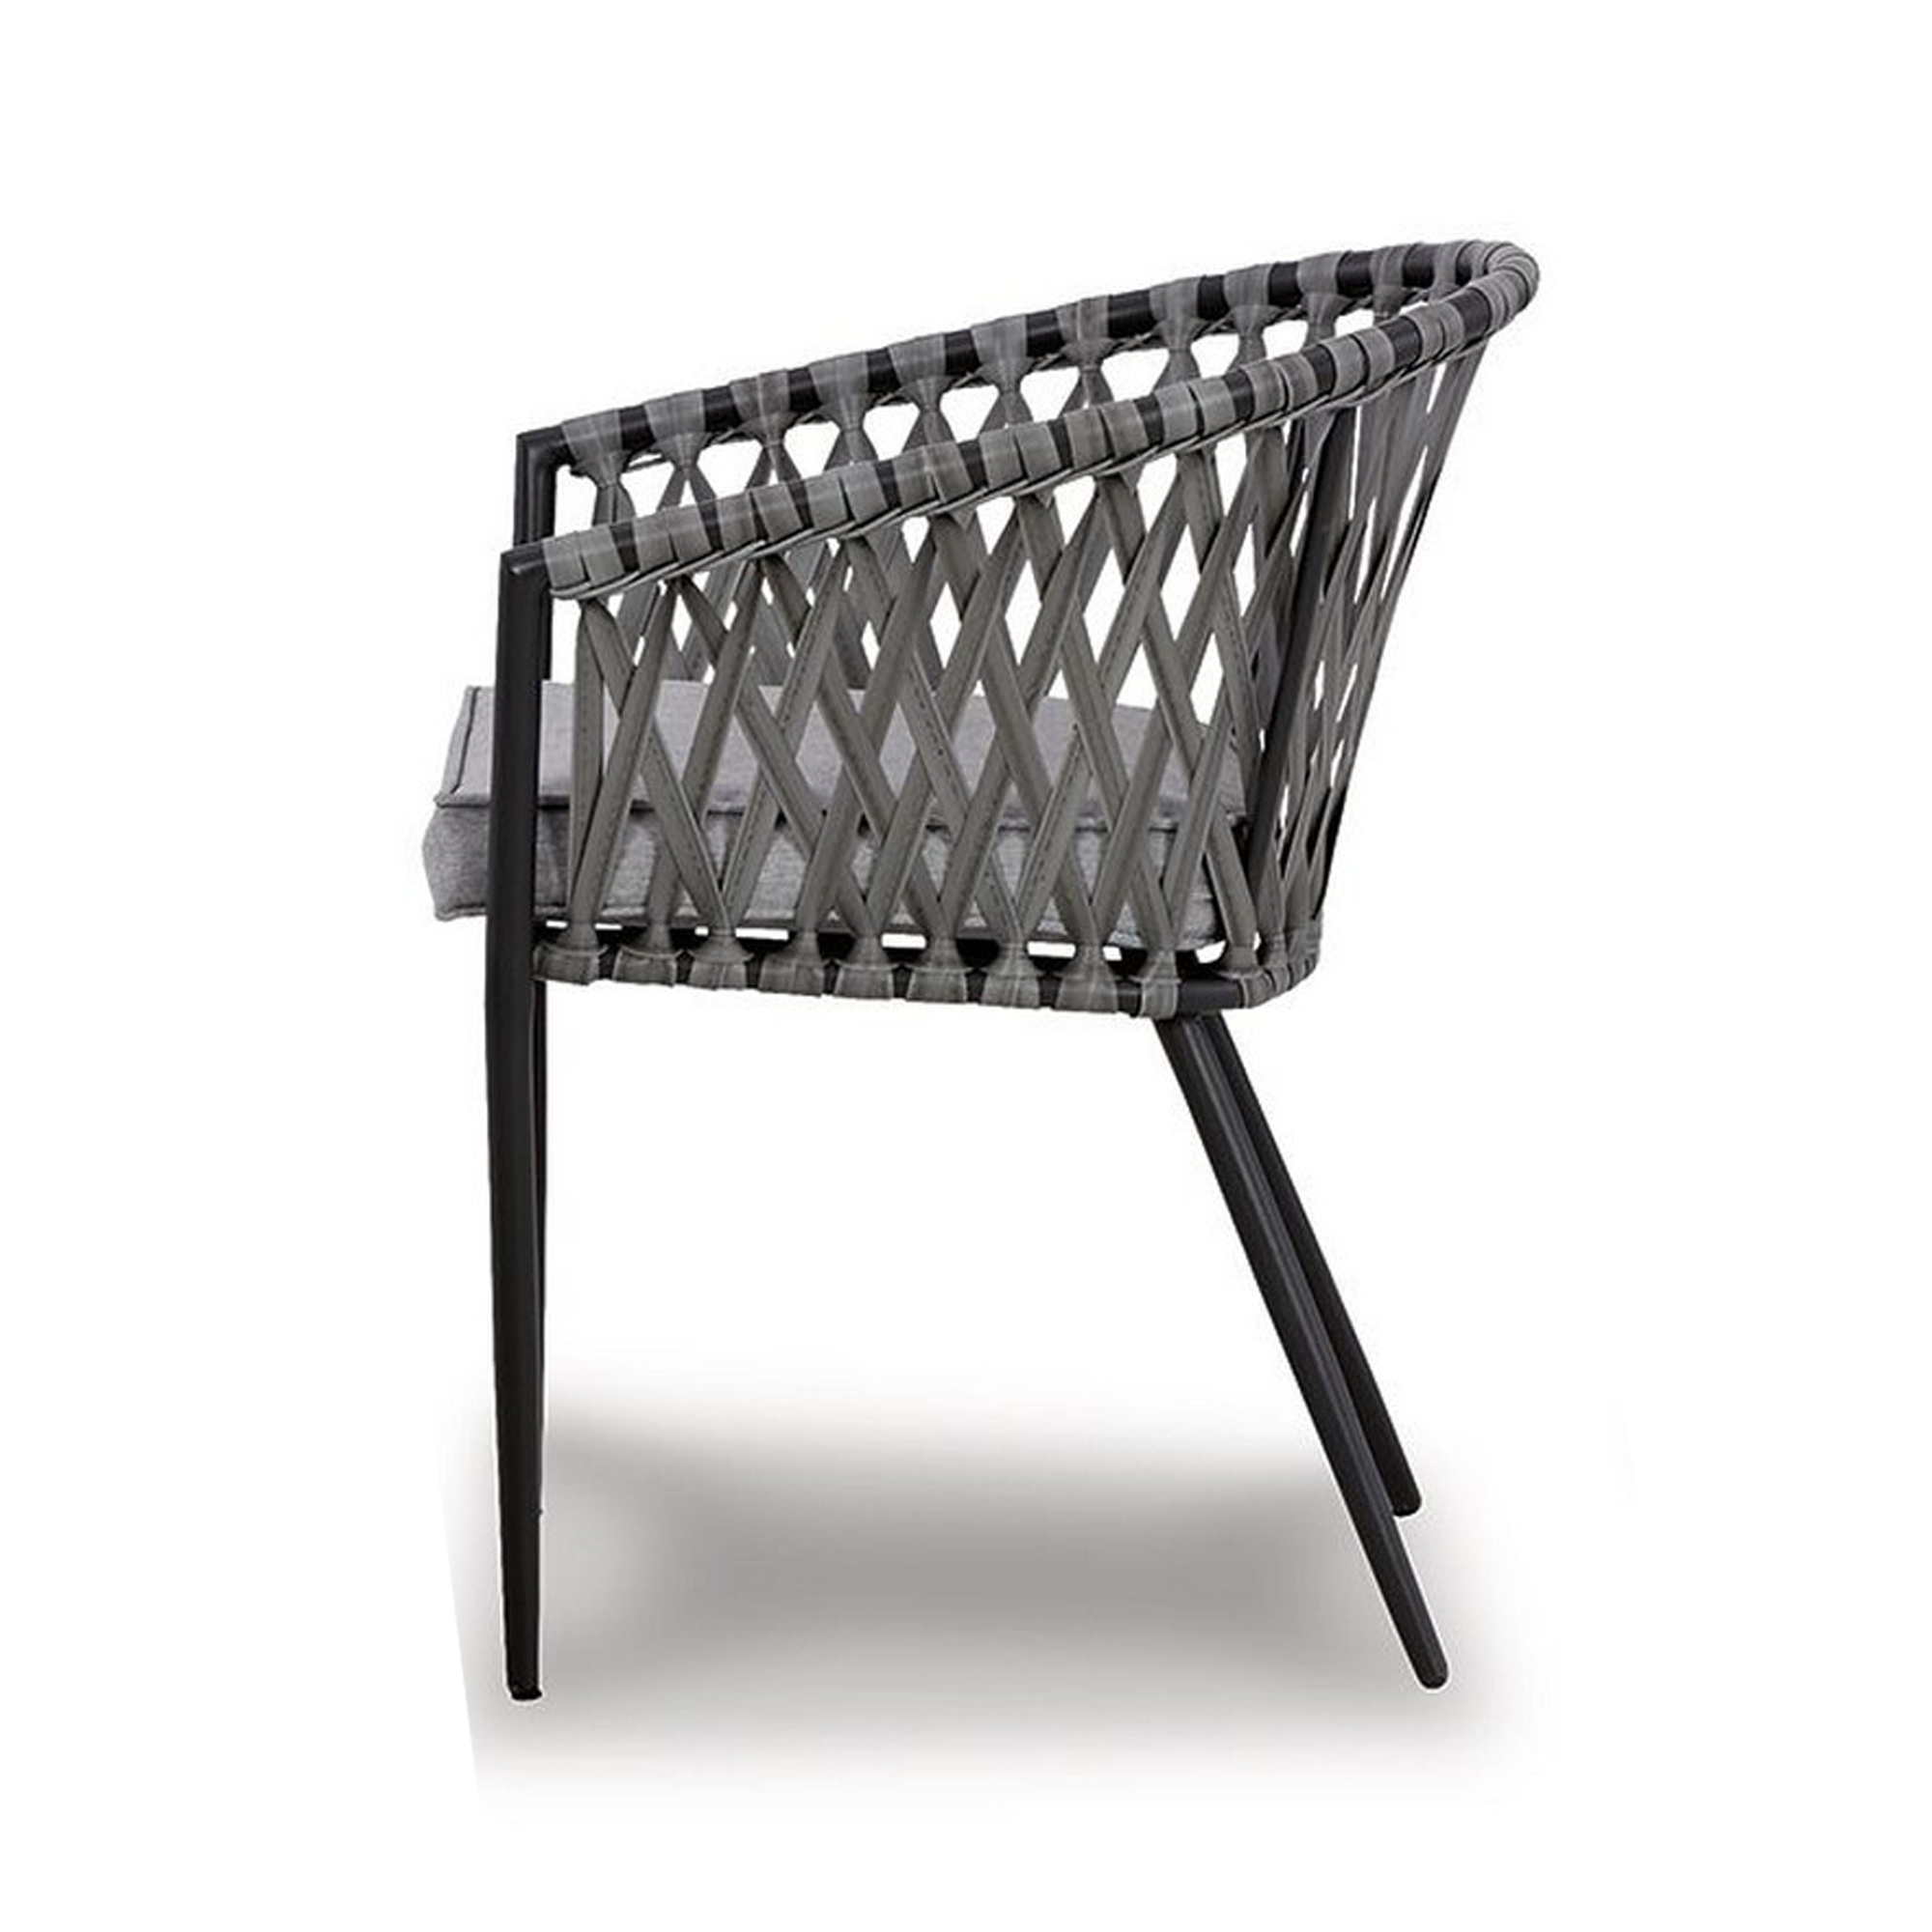 Plum 24 Inch Outdoor Dining Chair Set Of 4, Woven Wicker, Steel Frame, Gray - Saltoro Sherpi